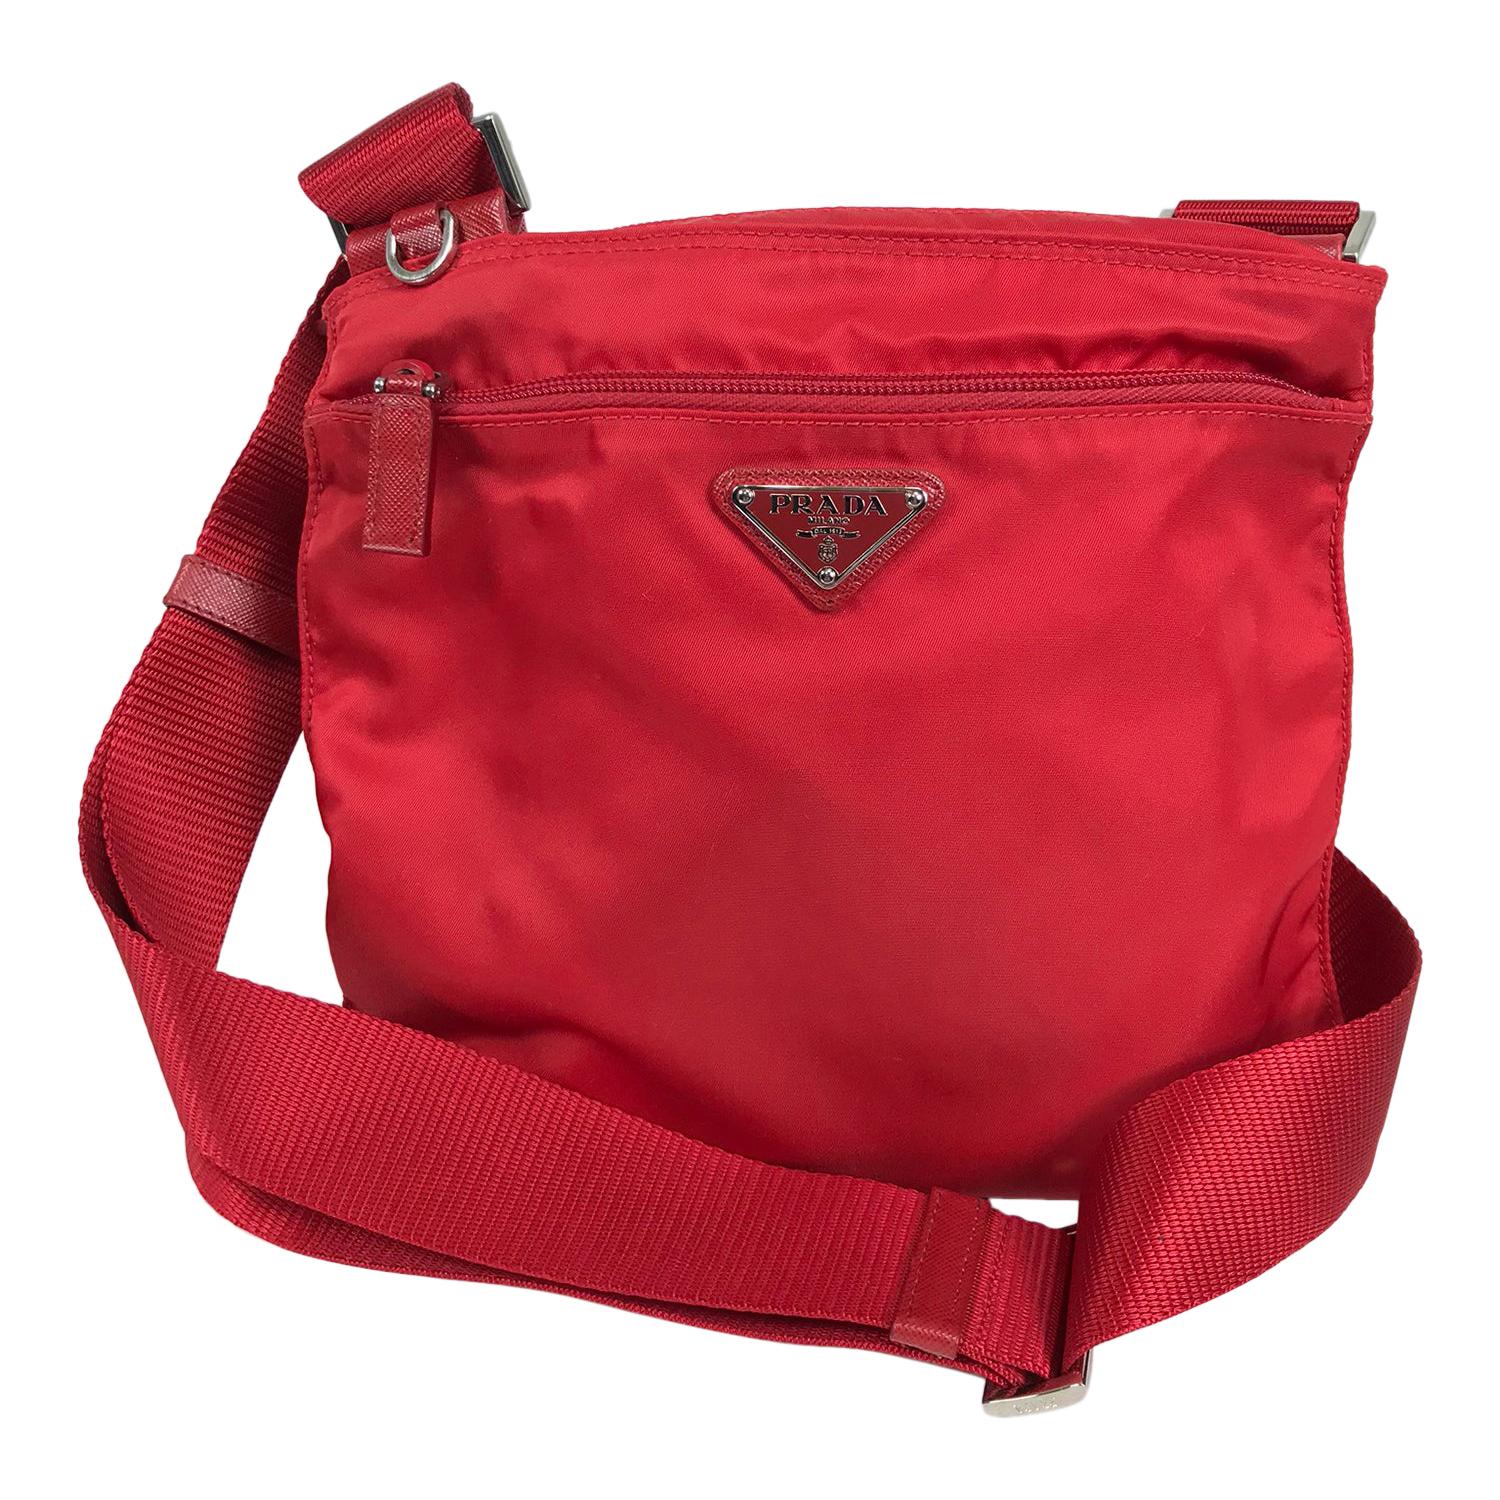 Prada Small Nylon Cross Body Handbag in Red